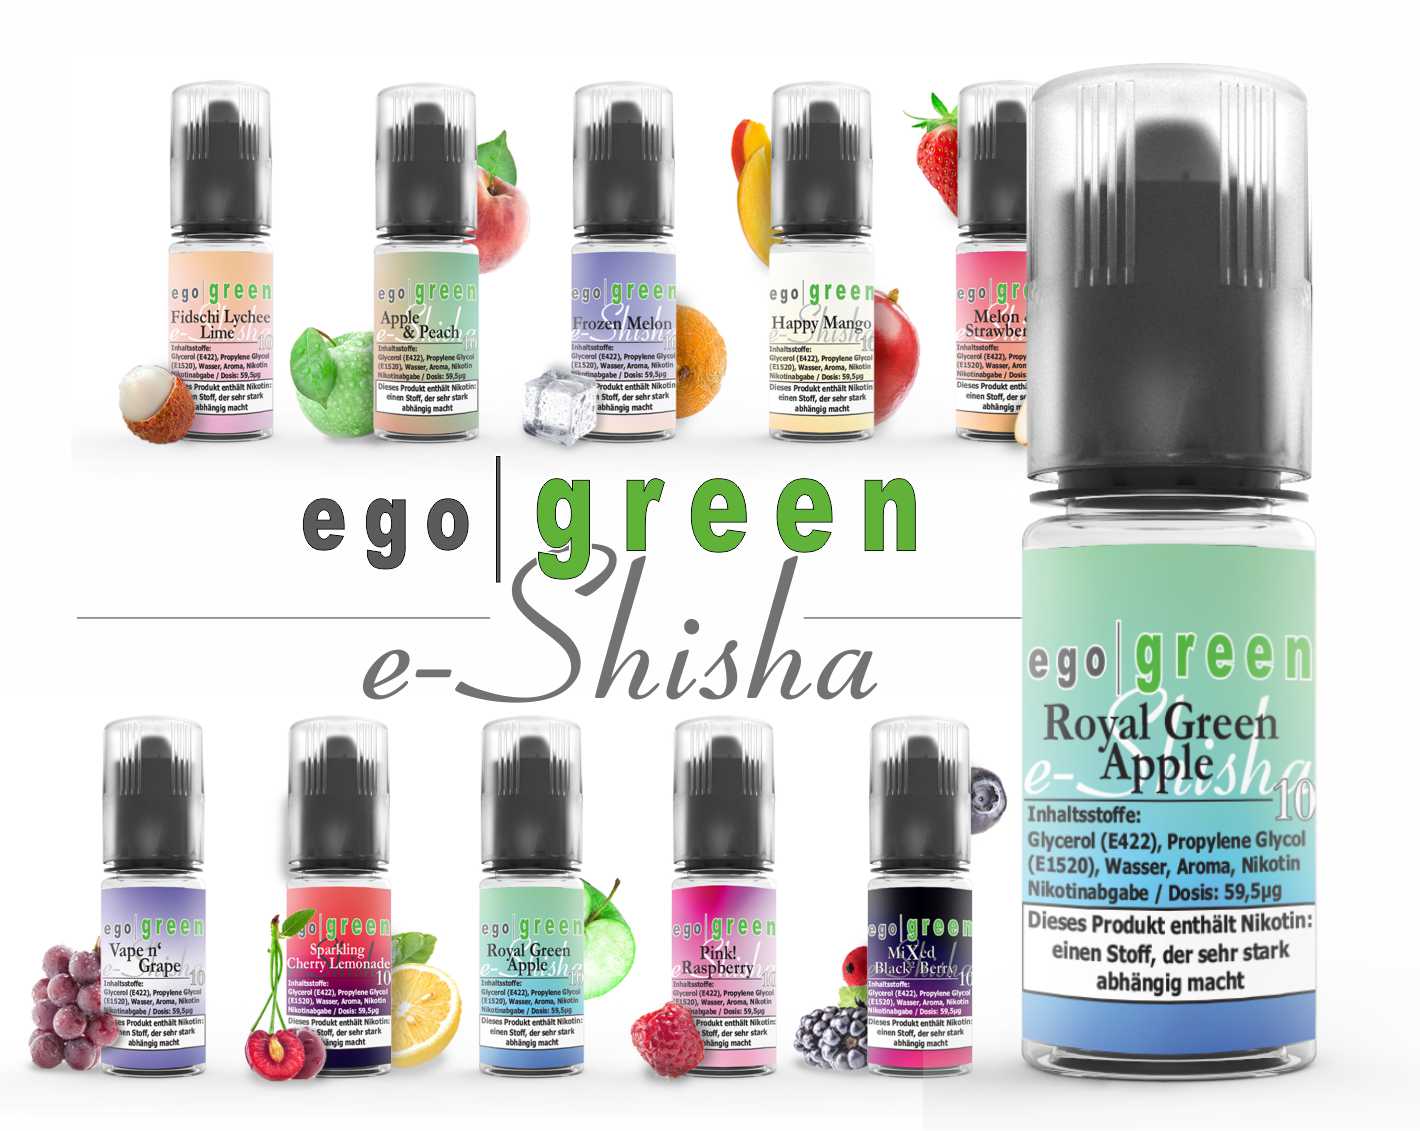 egogreen Royal Green Apple Nikotinsalz e-Shisha Liquid kaufen